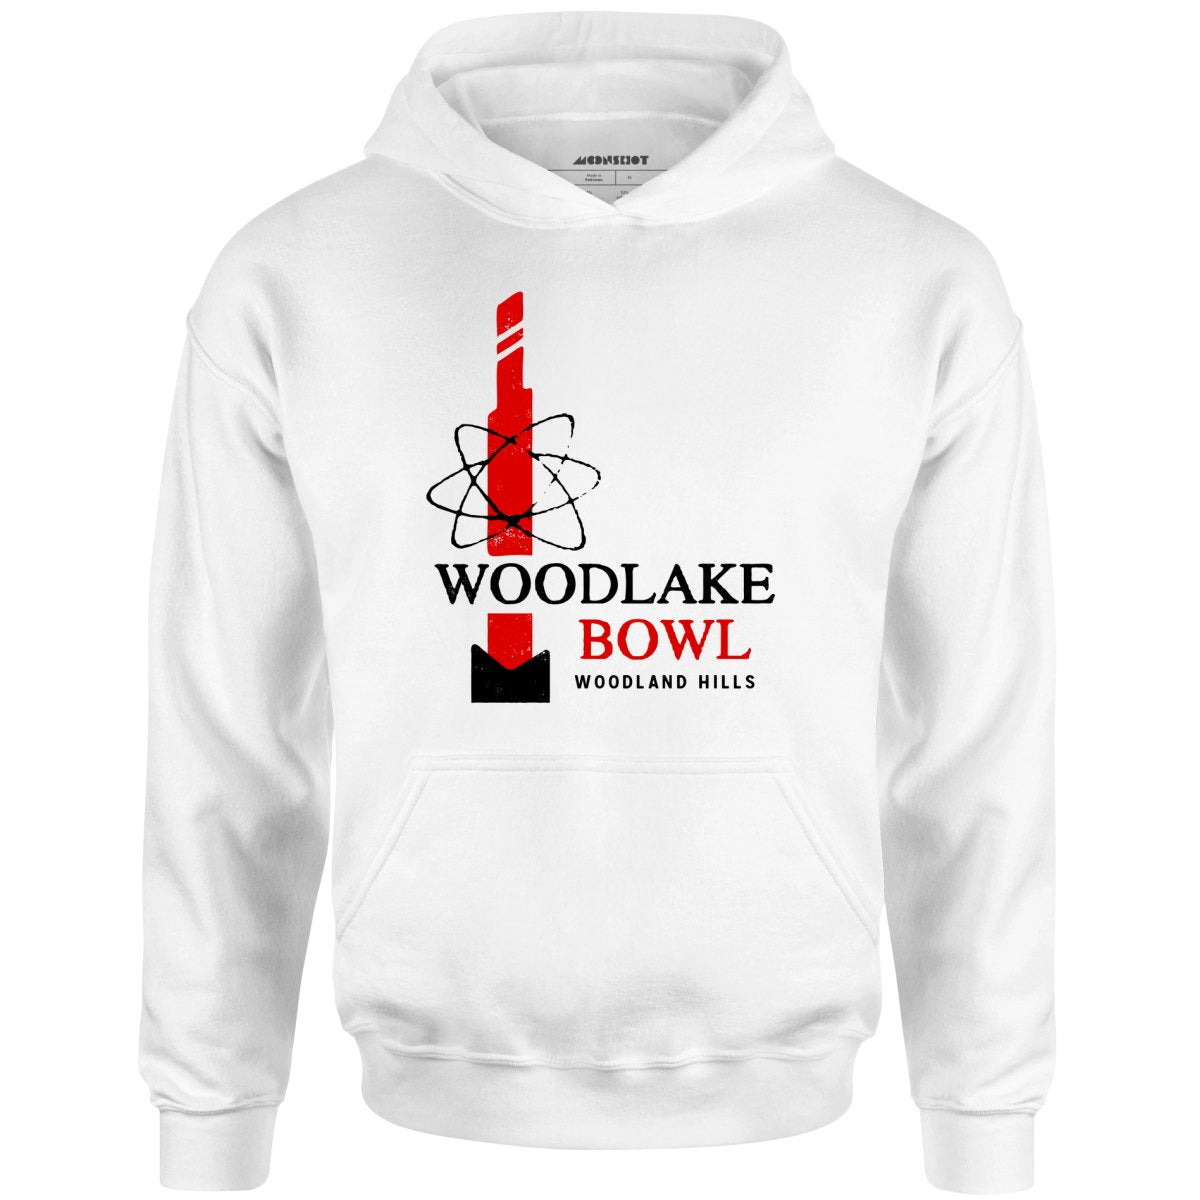 Woodlake Bowl - Woodland Hills, CA - Vintage Bowling Alley - Unisex Hoodie